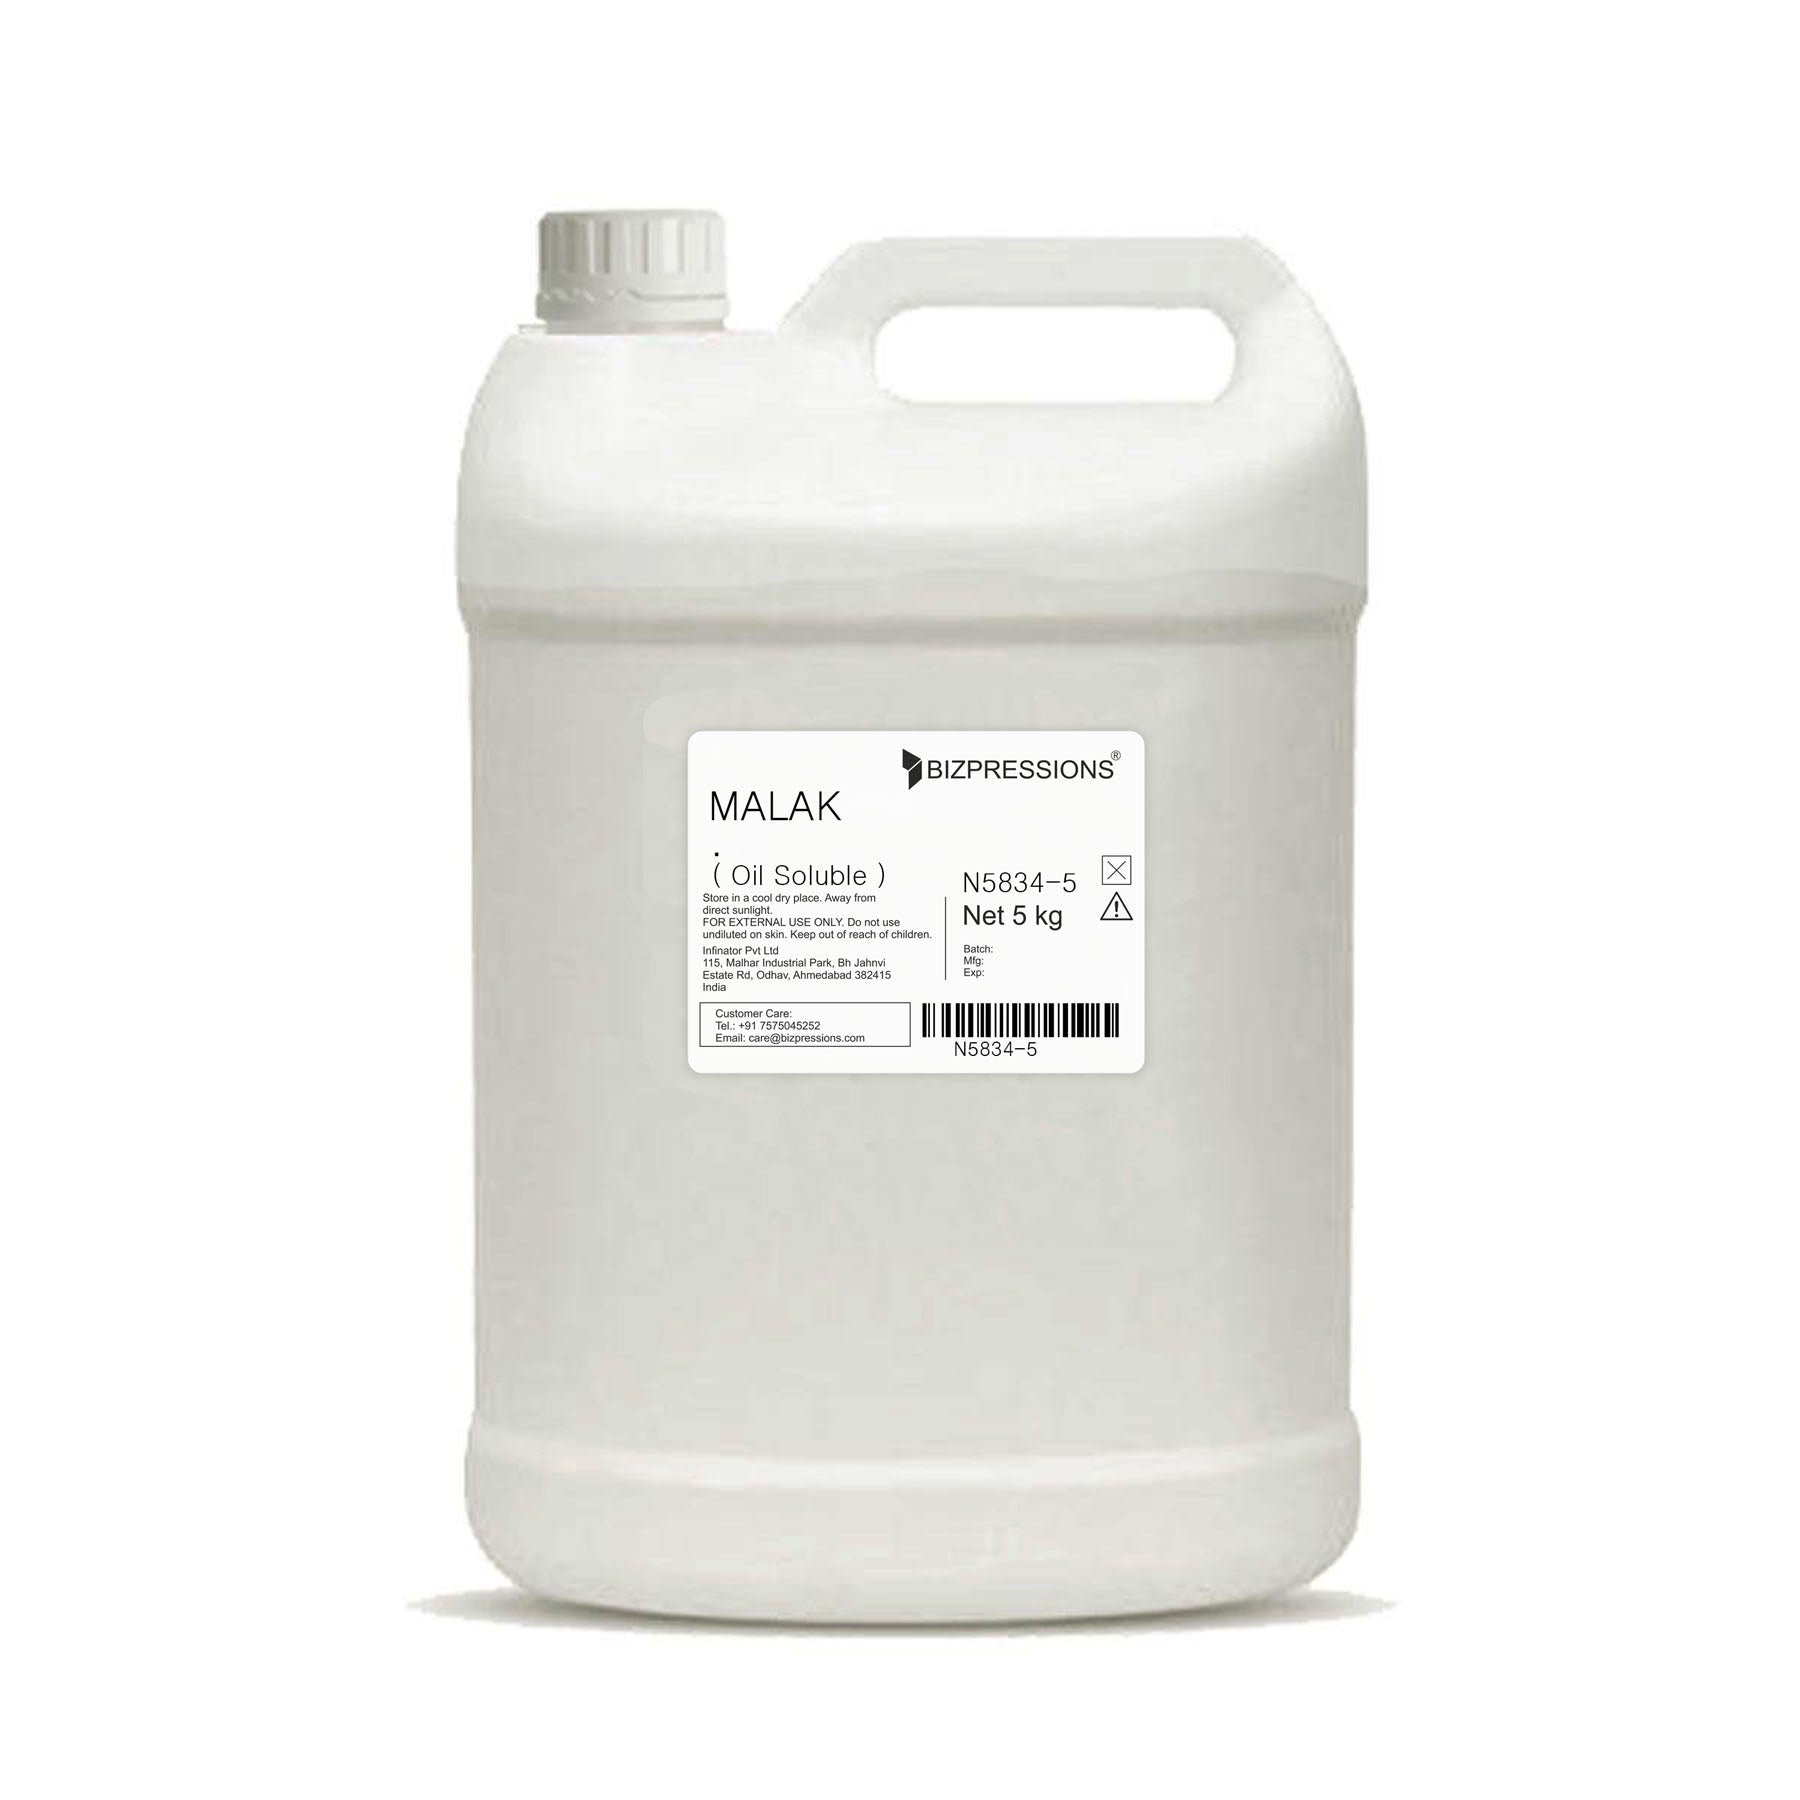 MALAK - Fragrance ( Oil Soluble ) - 5 kg